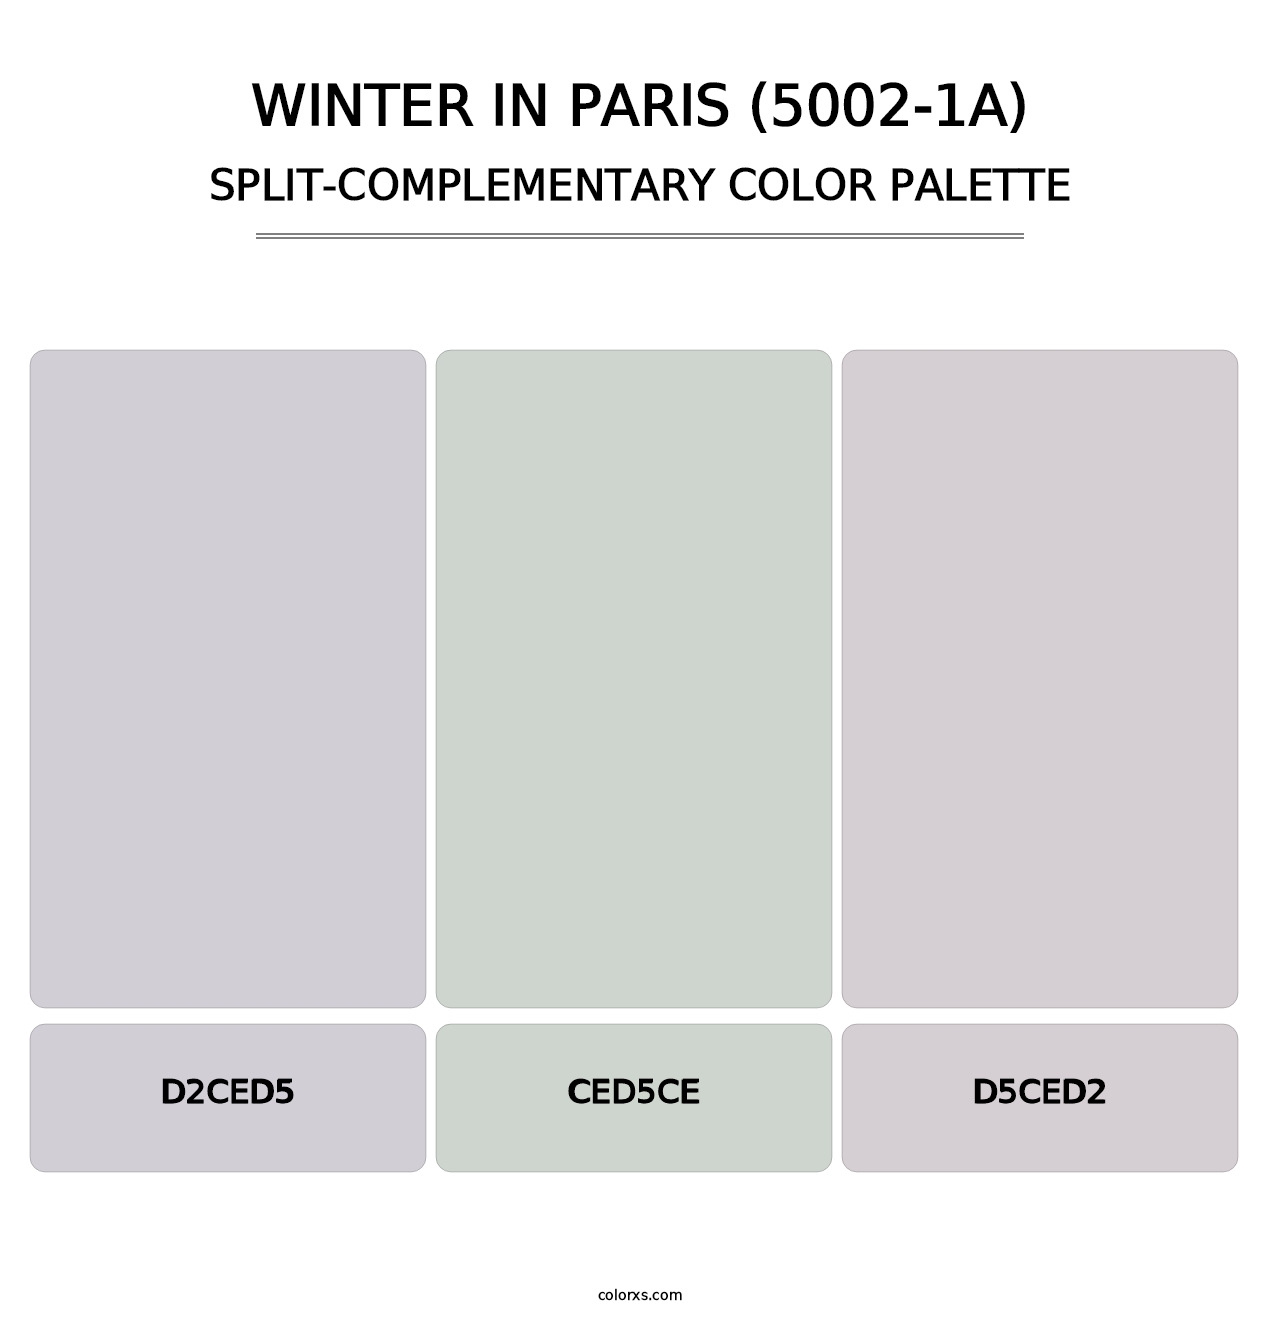 Winter in Paris (5002-1A) - Split-Complementary Color Palette